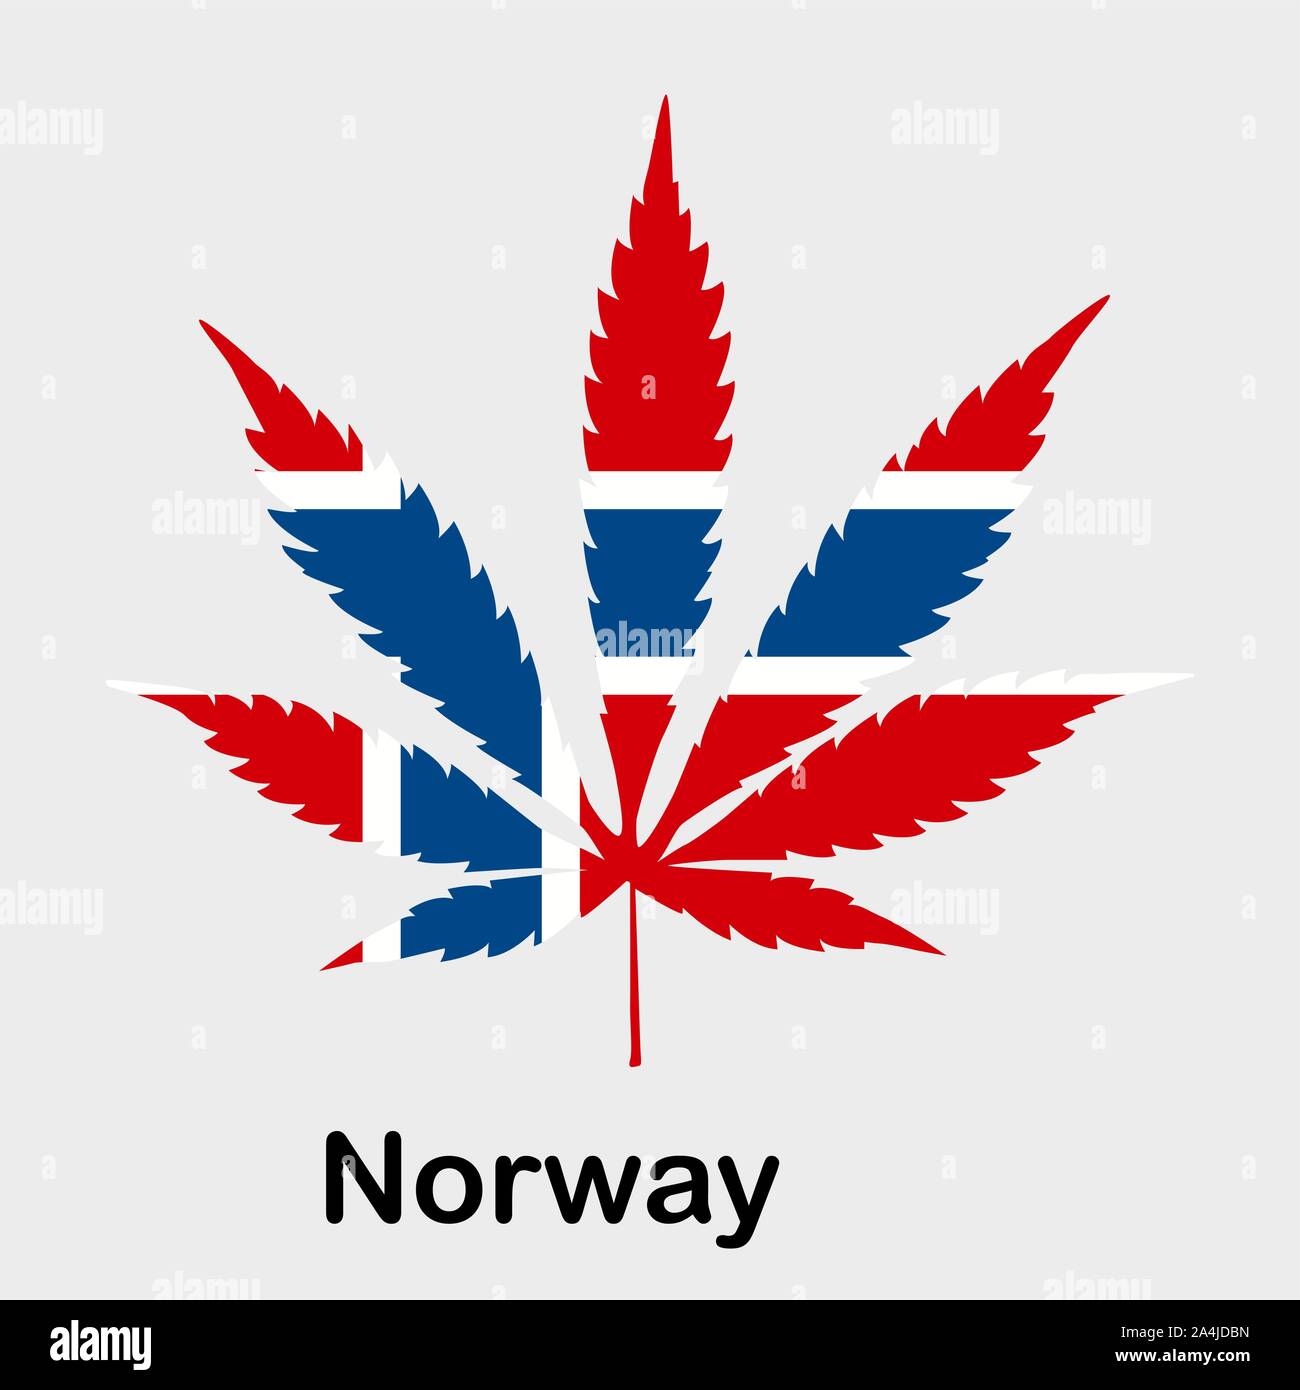 Норвегия марихуана сорт марихуаны ak 48